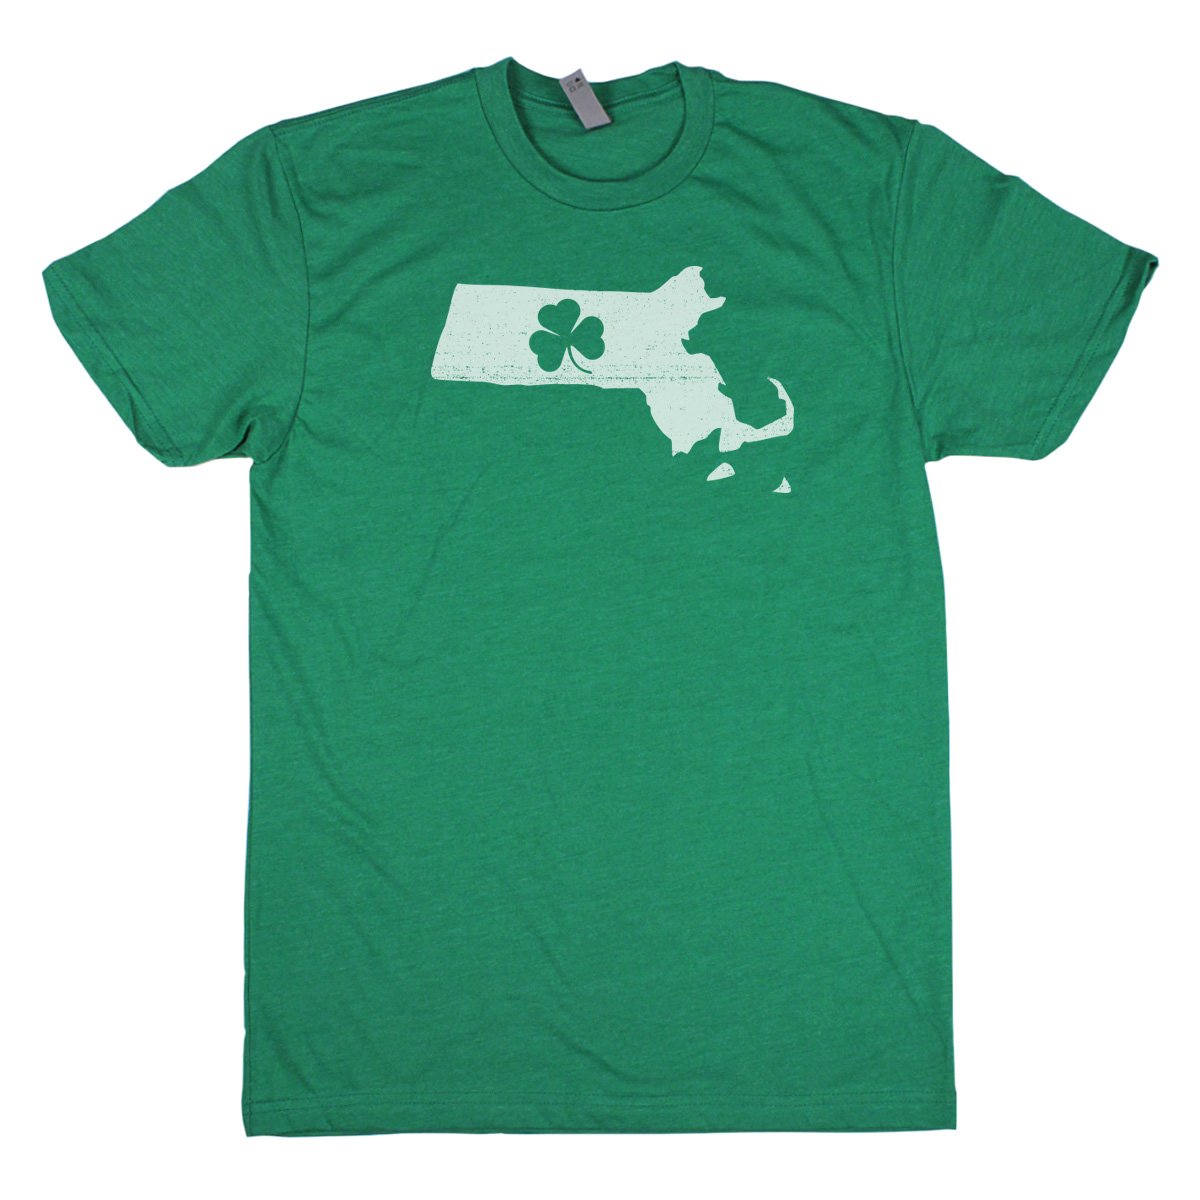 Shamrock Men's Unisex T-Shirt - Tennessee